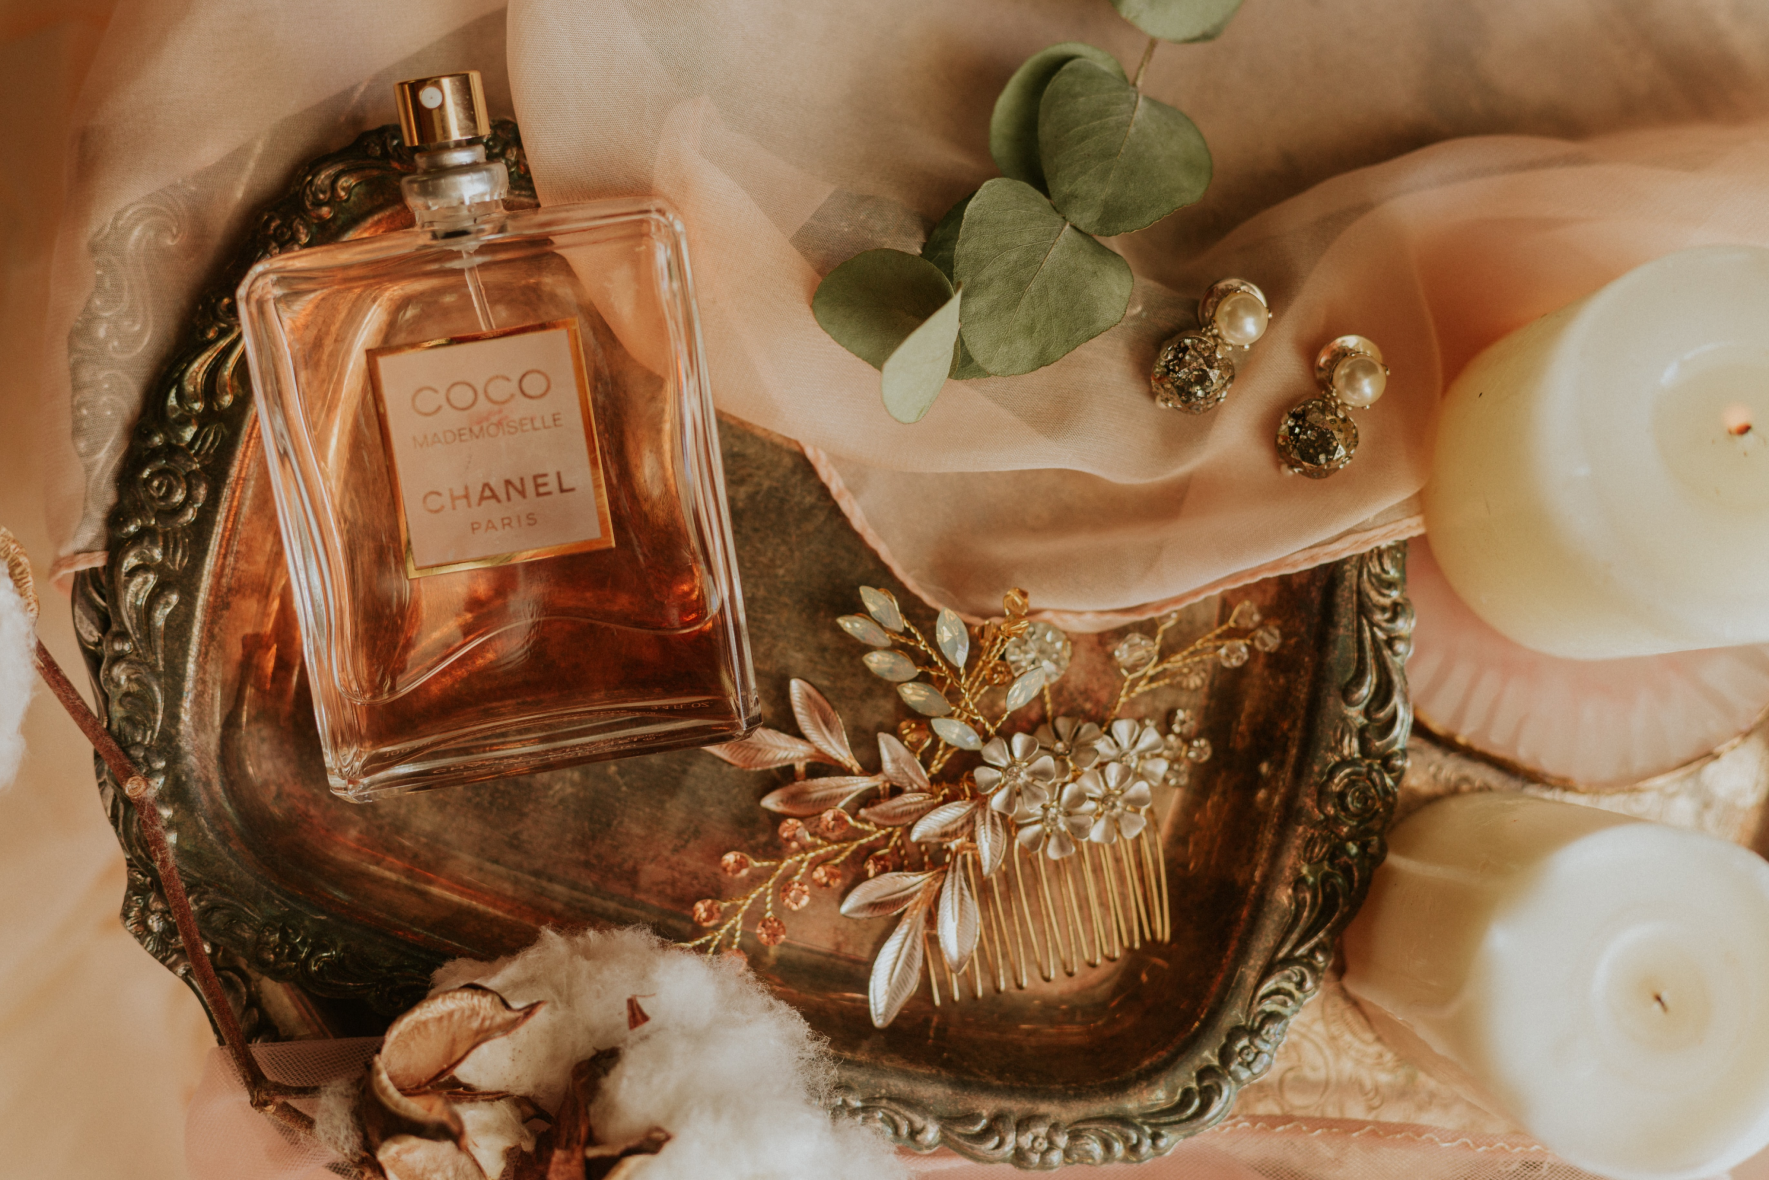  Gucci 4 Piece Mini Perfumes for Women Fragrance Gift Set - 2  ea Bloom EDP 0.16 oz splash and Flora Gorgeous Gardenia EDP 0.16 oz splash  : Beauty & Personal Care